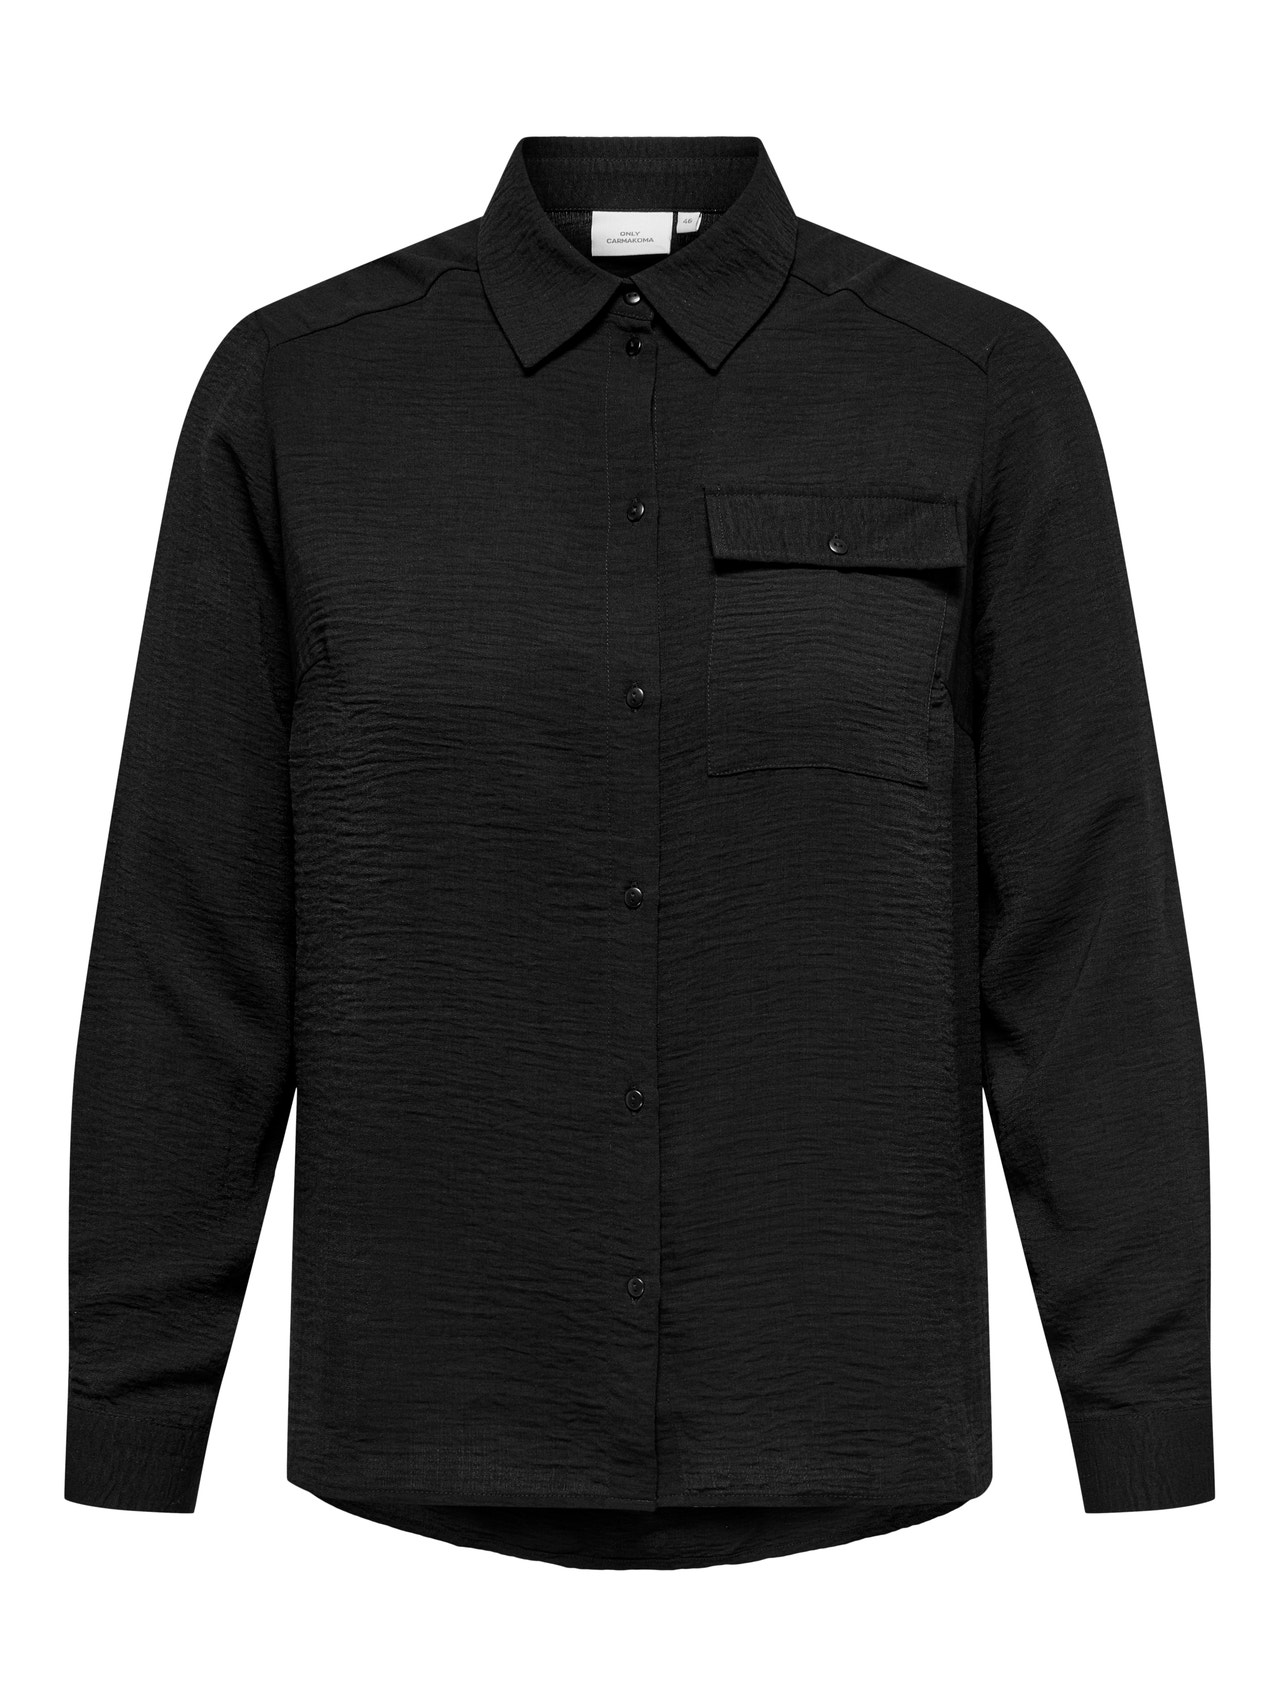 ONLY Curvy regular fit skjorte -Black - 15335765